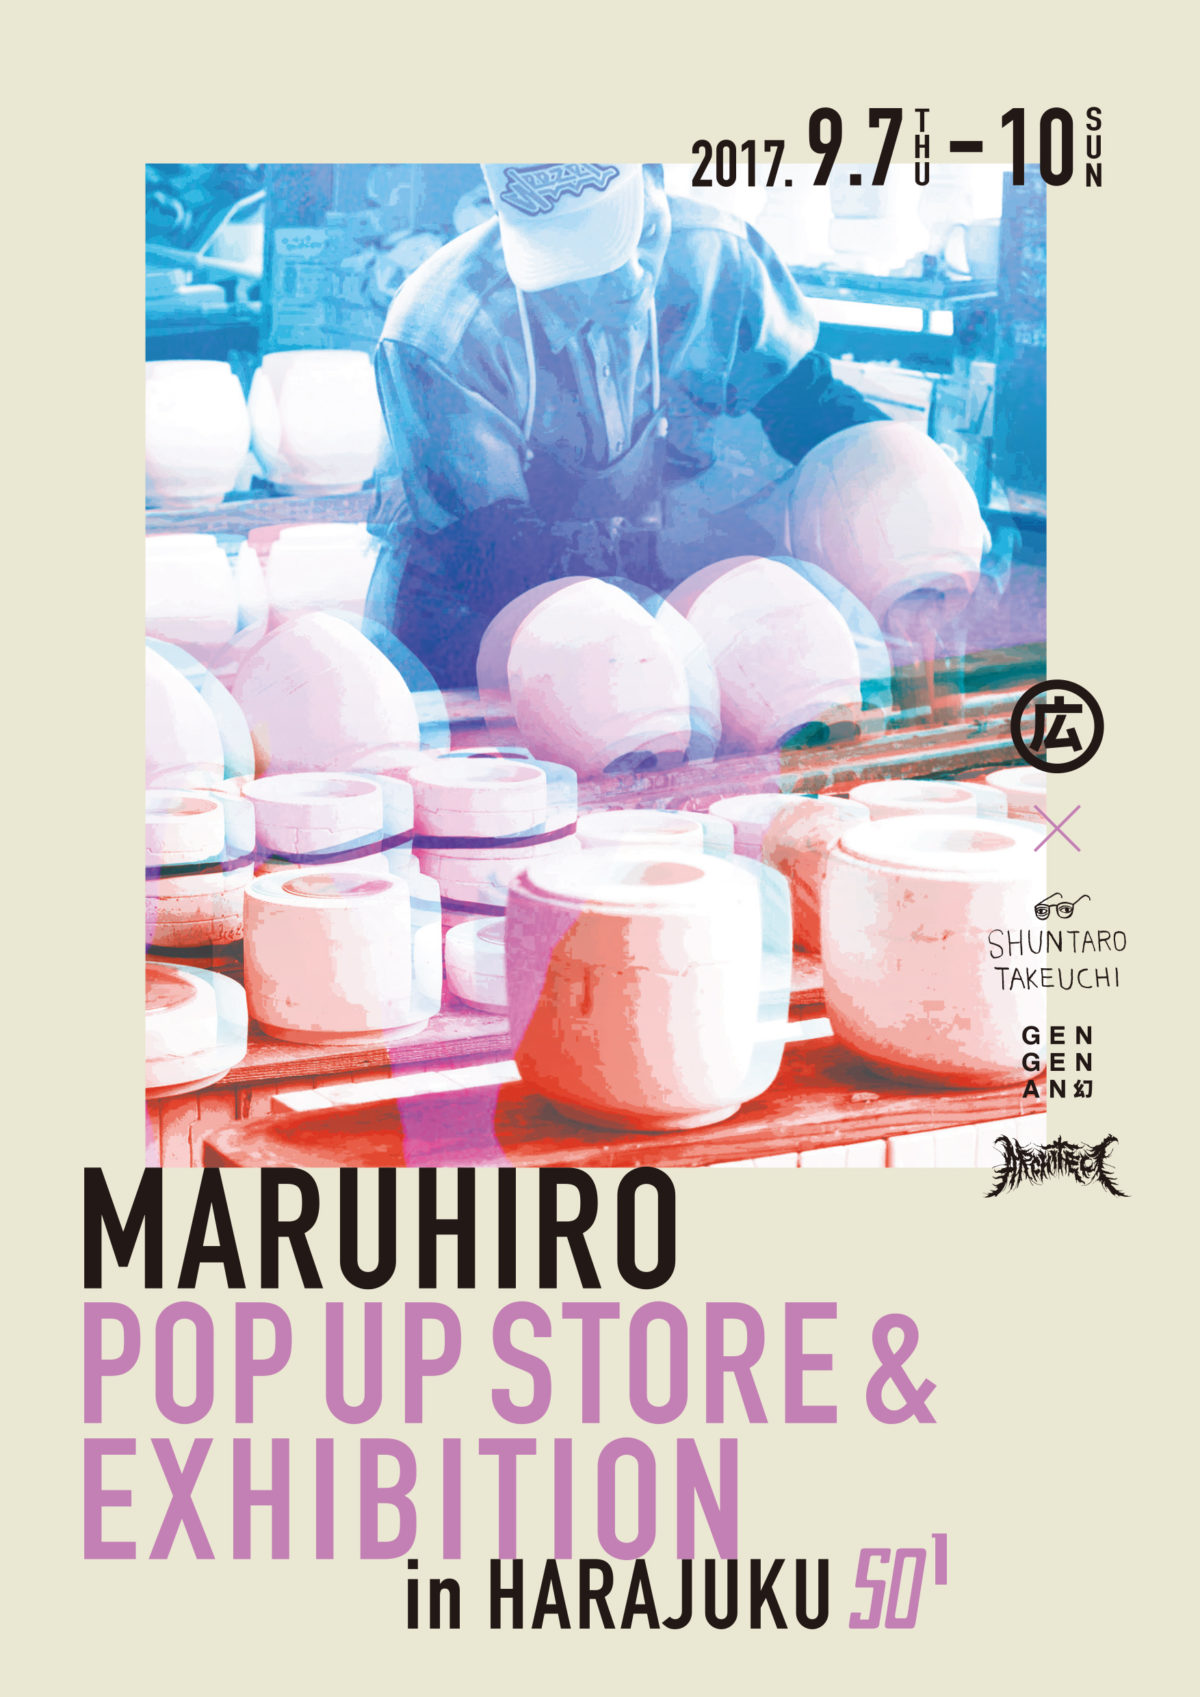 Maruhiro Pop up store & Exhibition